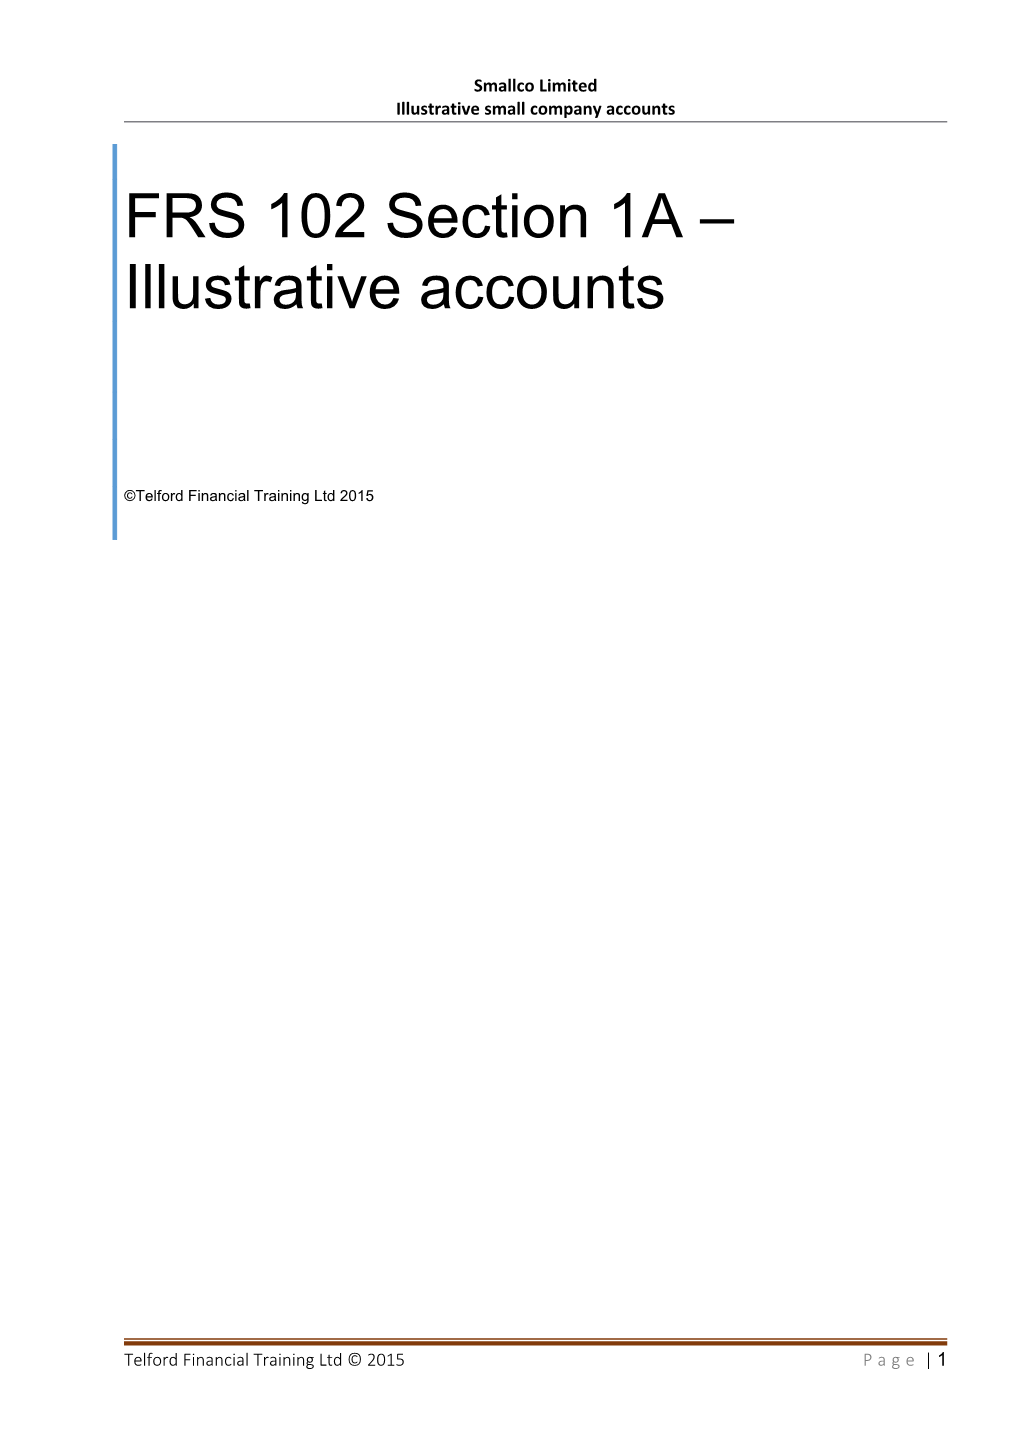 Illustrative Small Company Accounts